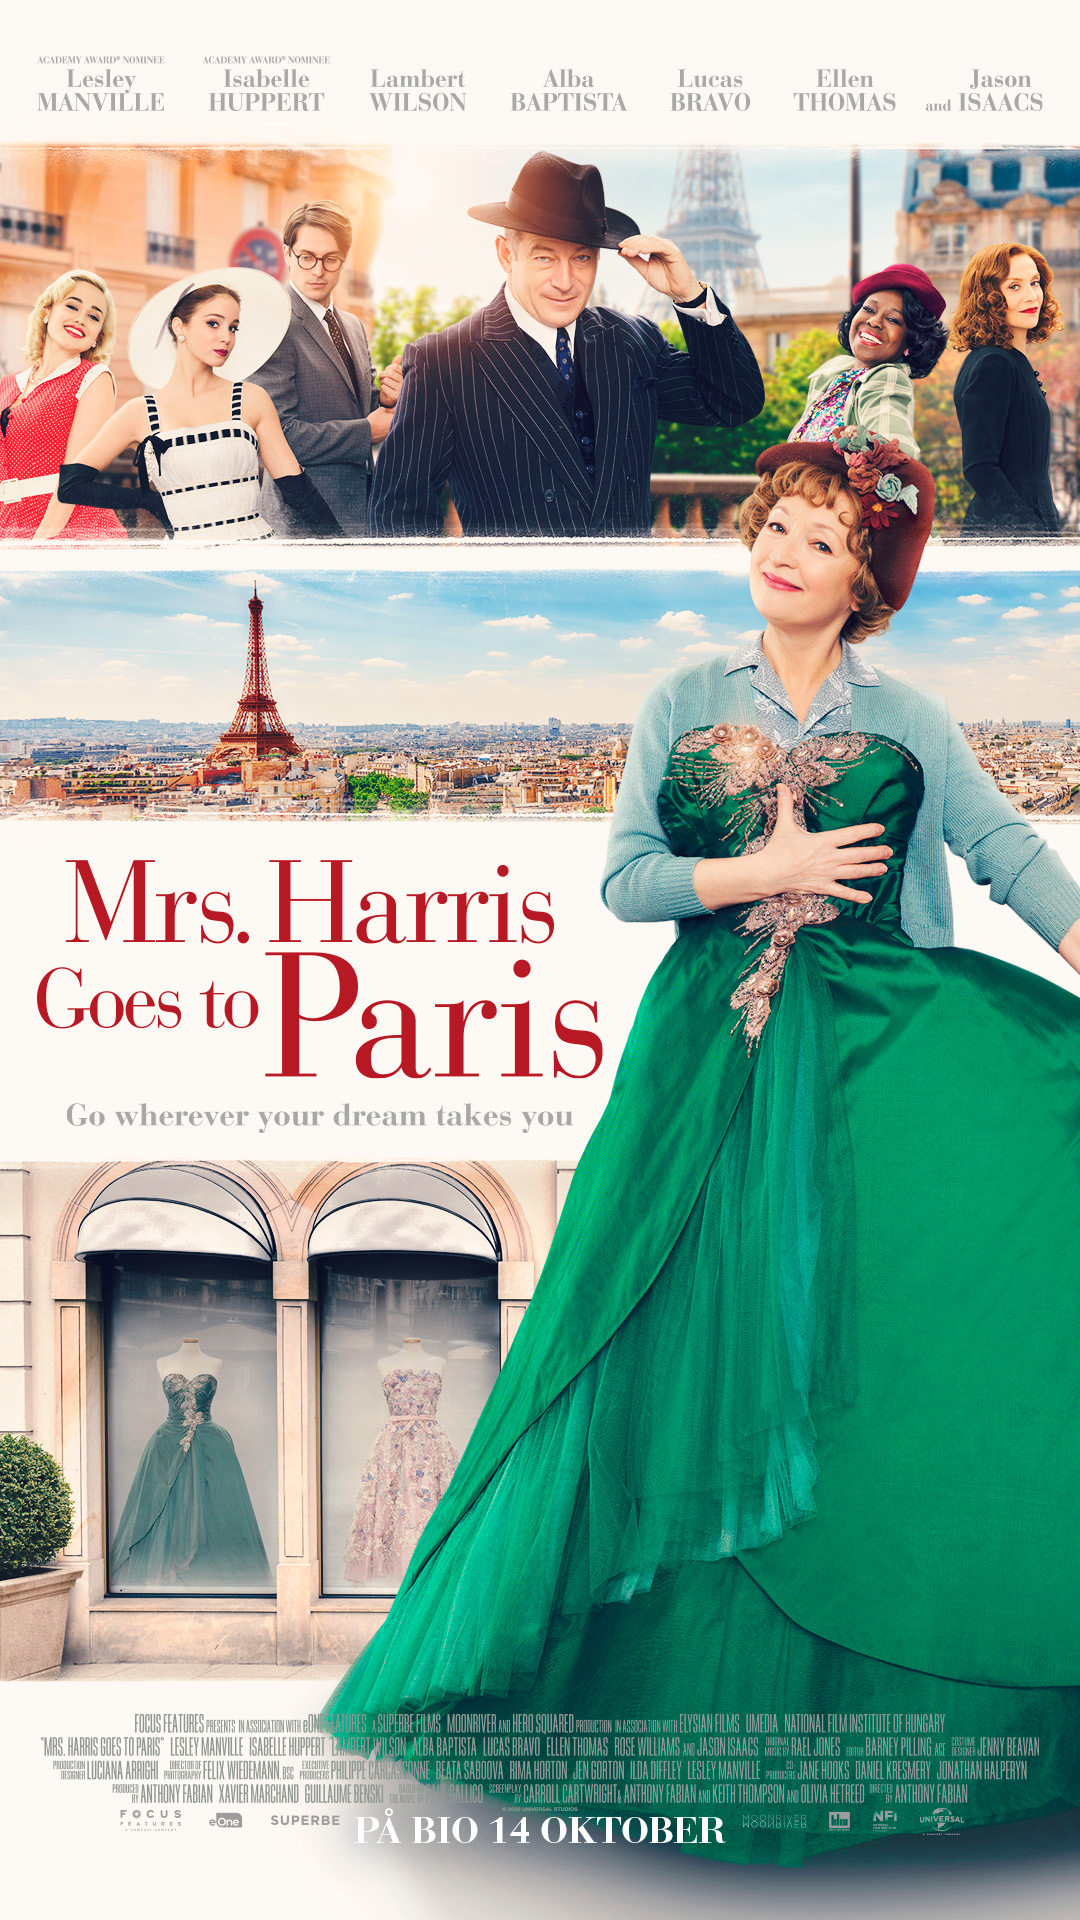 MRS. HARRIS GOES TO PARIS